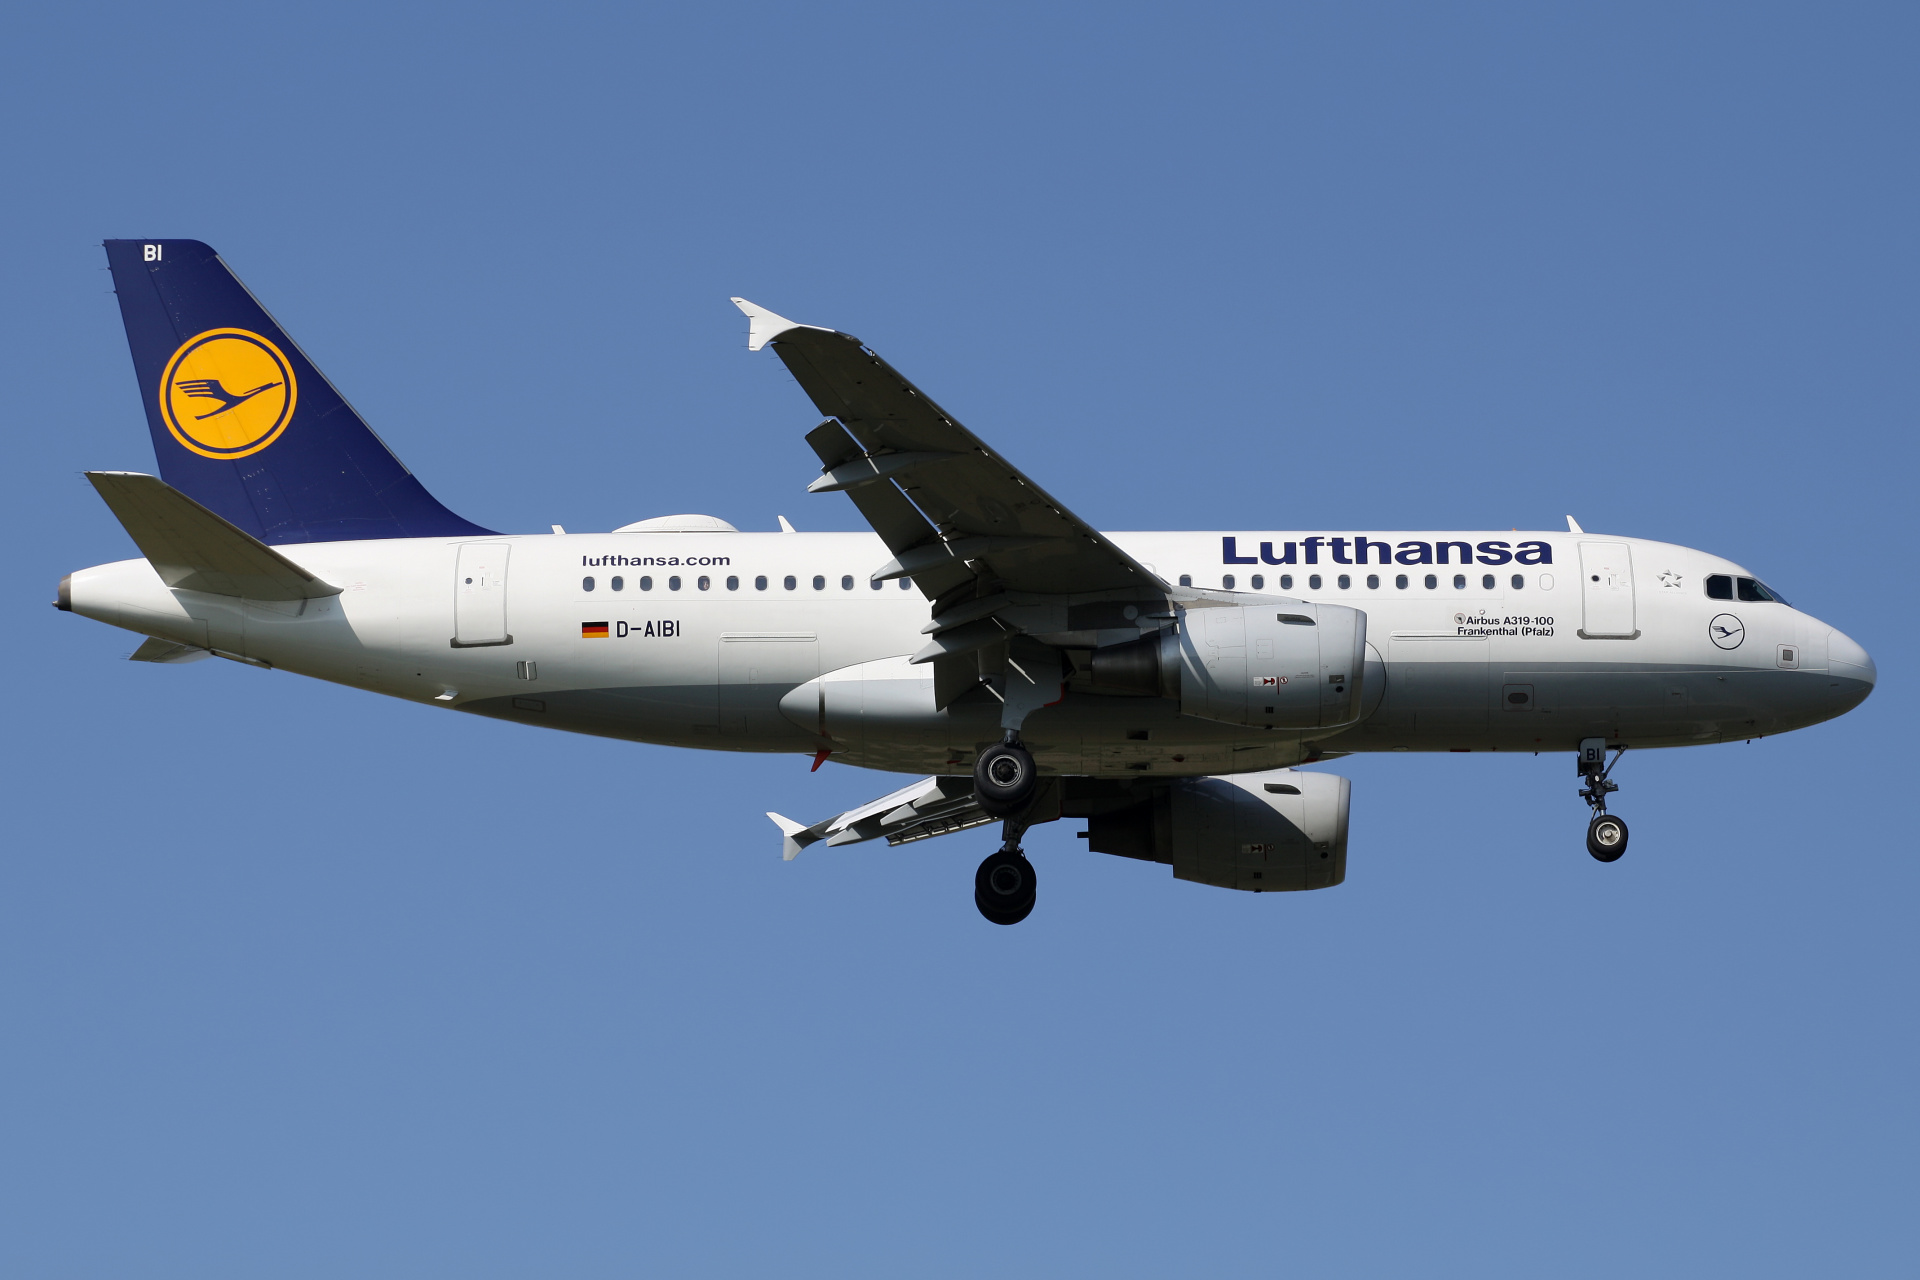 D-AIBI (Aircraft » EPWA Spotting » Airbus A319-100 » Lufthansa)